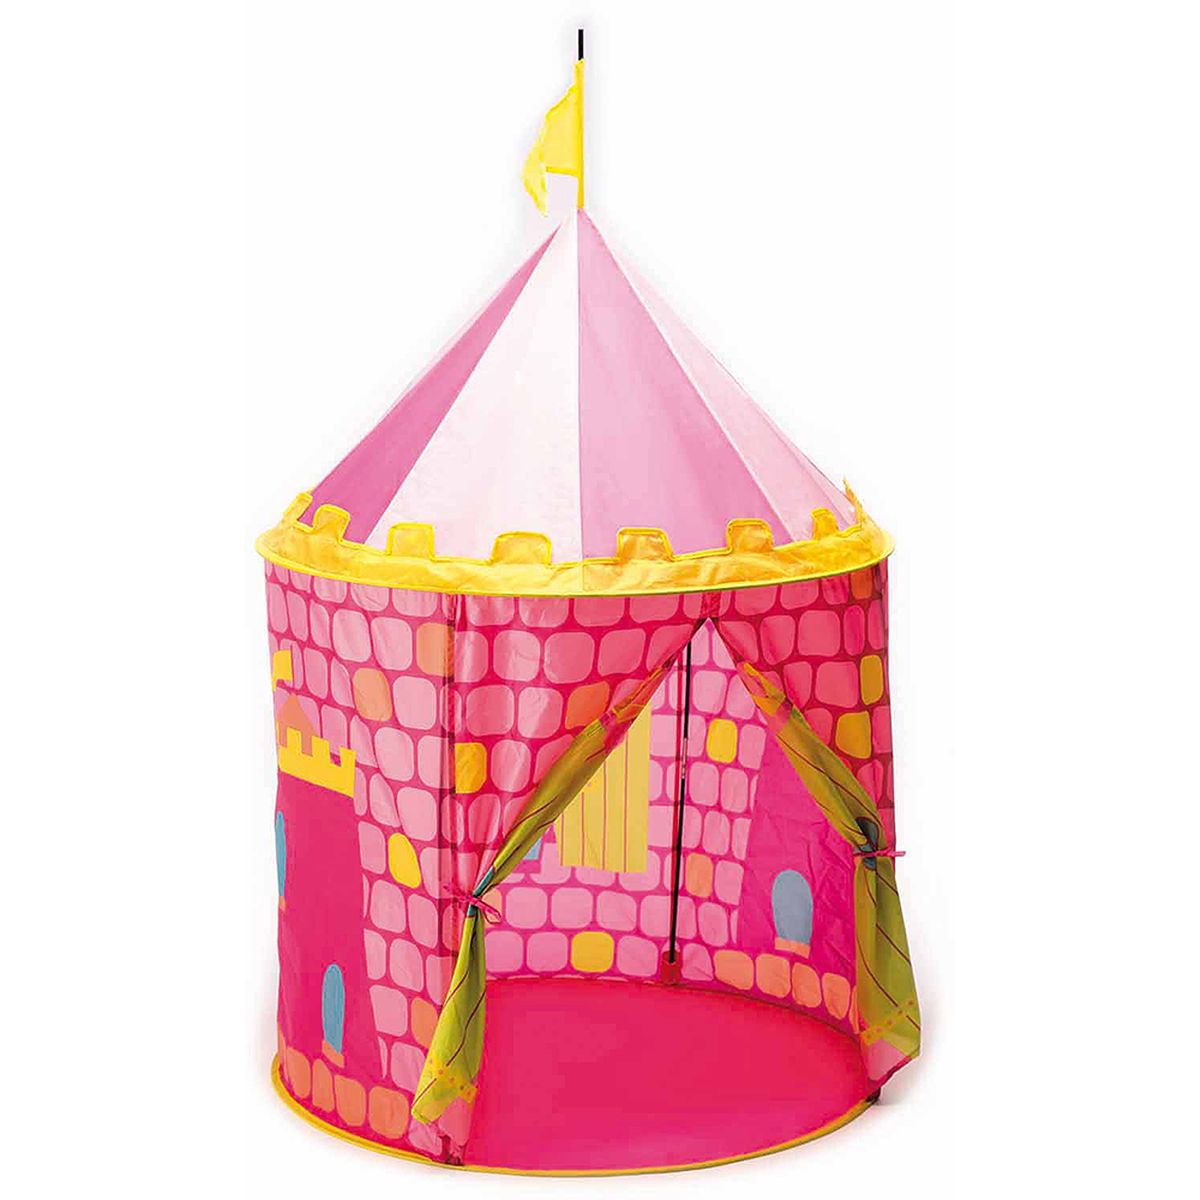 [RDY] [送料無料] Fun2Give Pop-it-Up Princess Castle Tent [楽天海外通販] | Fun2Give Pop-it-Up Princess Castle Tent